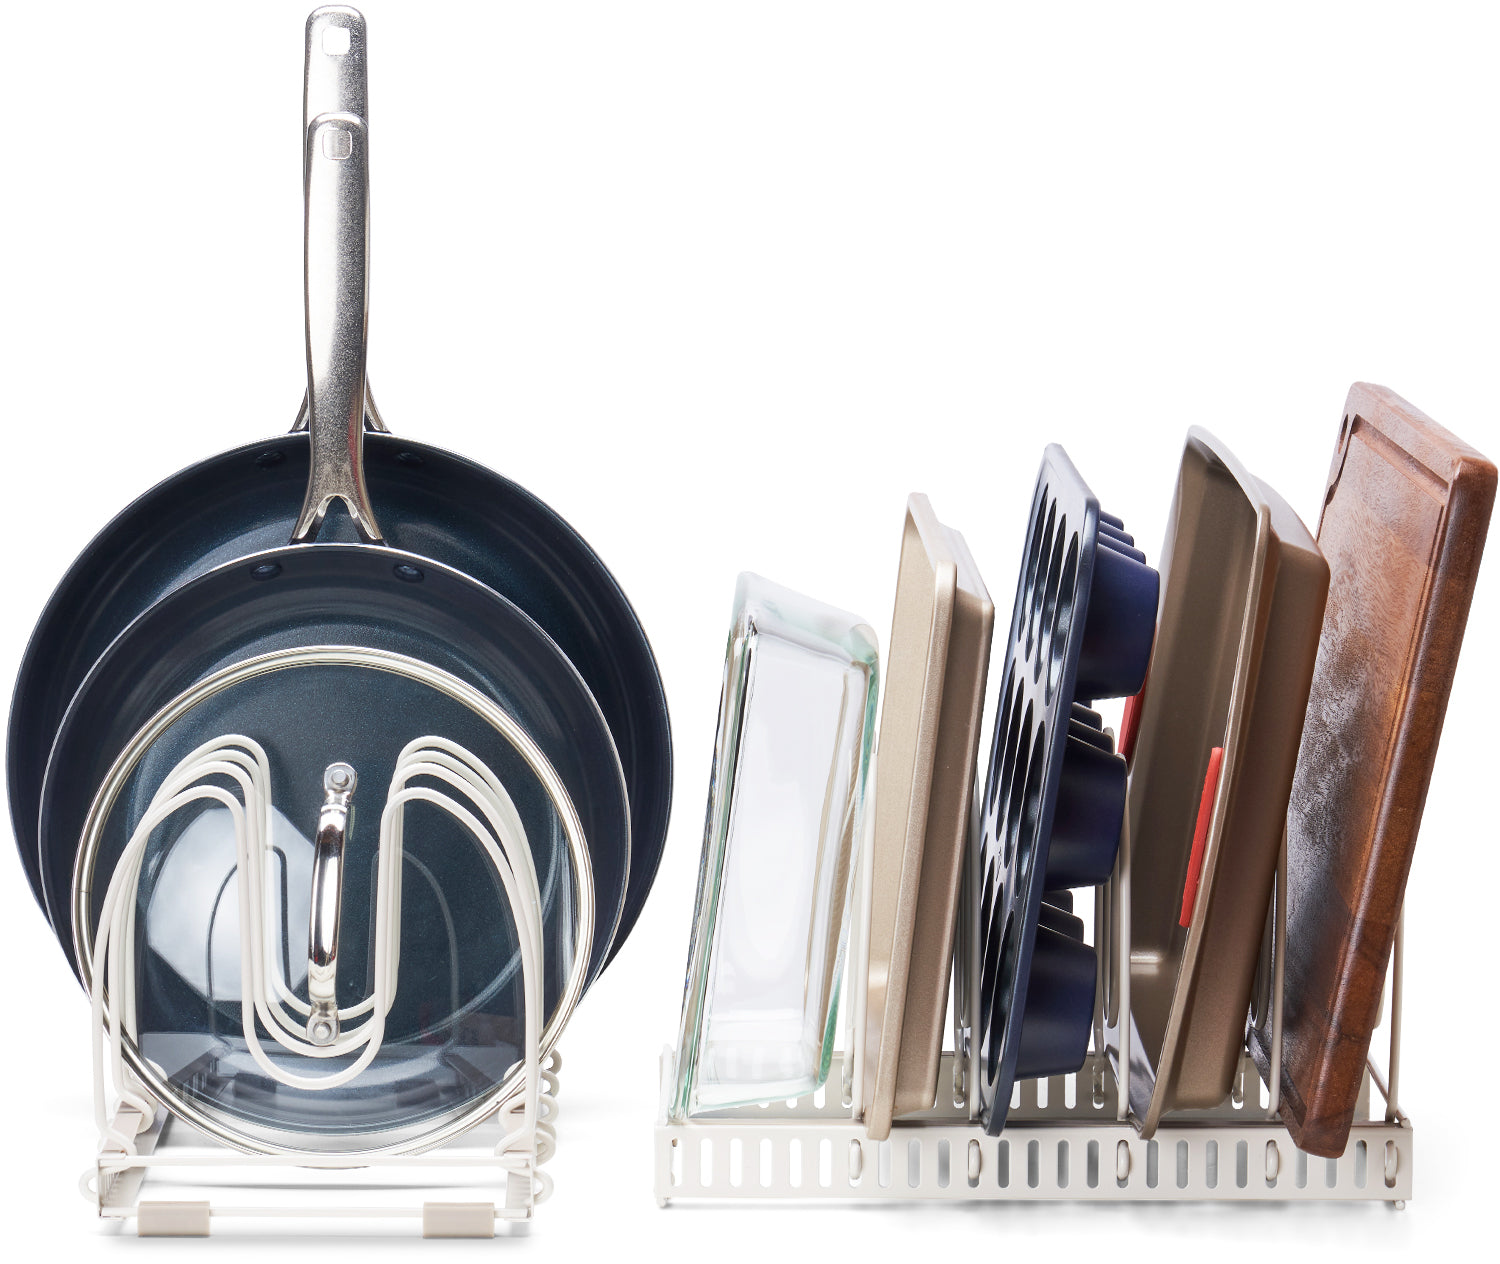 GeekDigg 8+ Pantry & Countertop Pot & Pan Organizer Rack, Adjustable &  Expandable for Cabinet, Silver